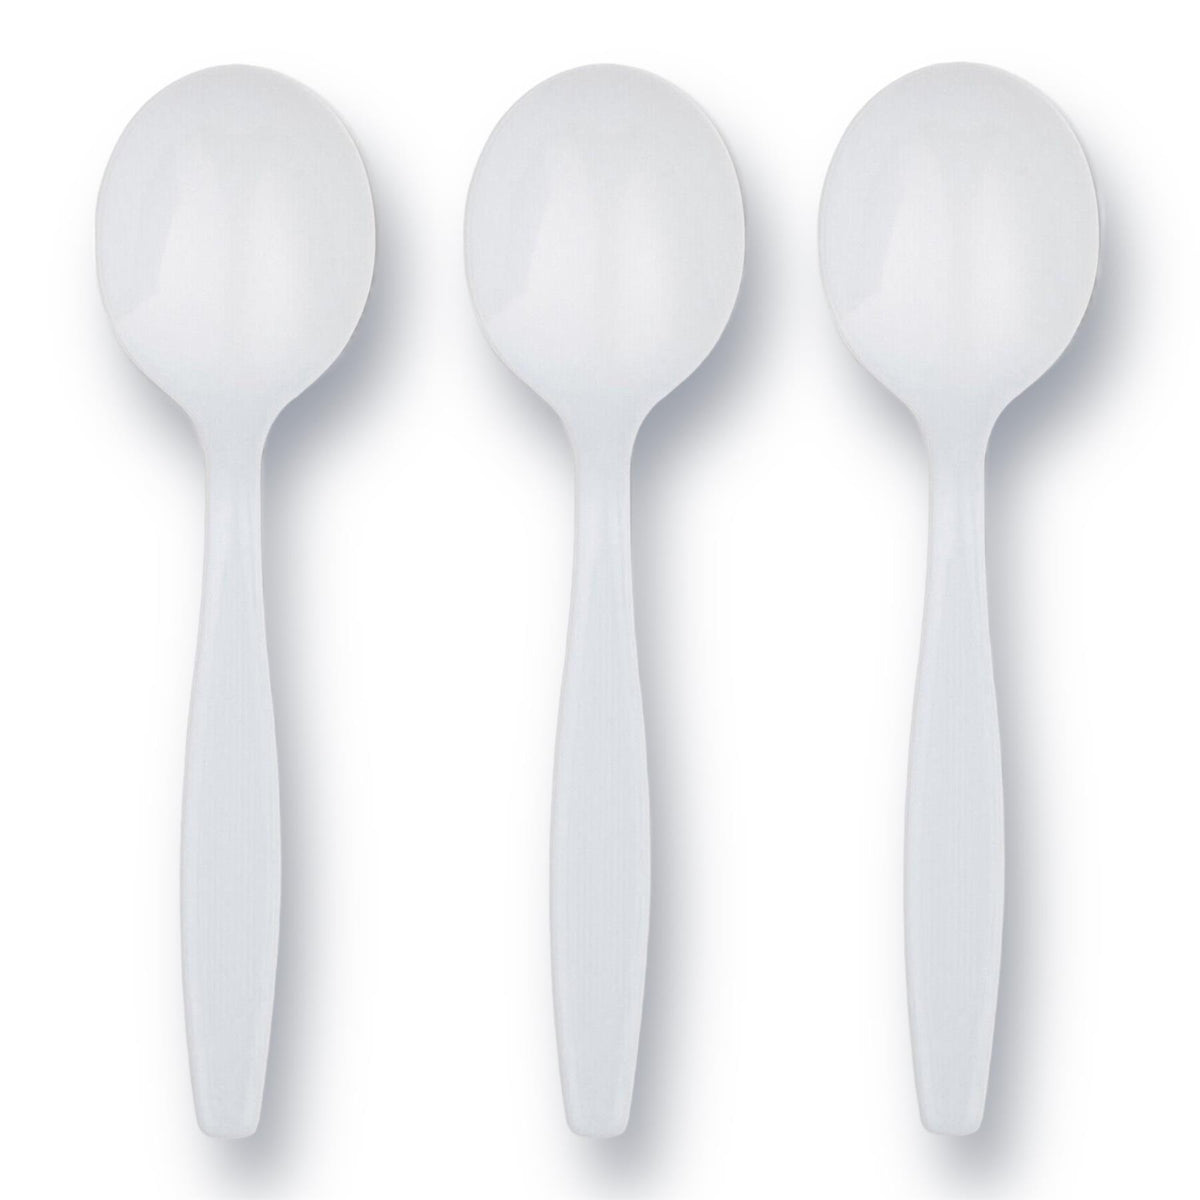 100 White Heavy Duty Plastic Spoons